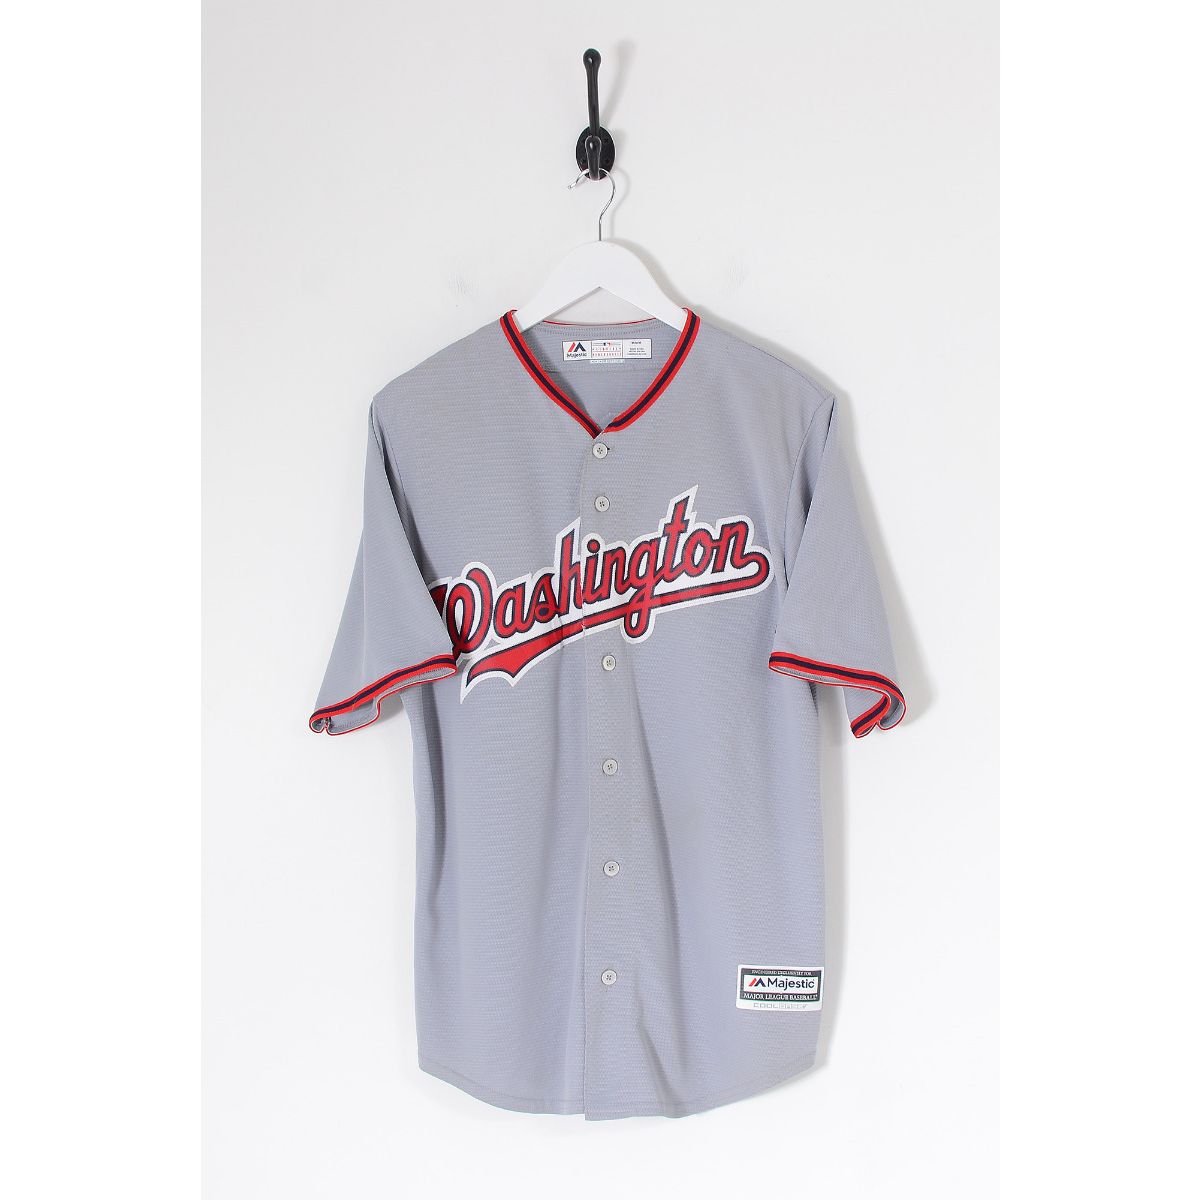 washington nationals baseball jersey